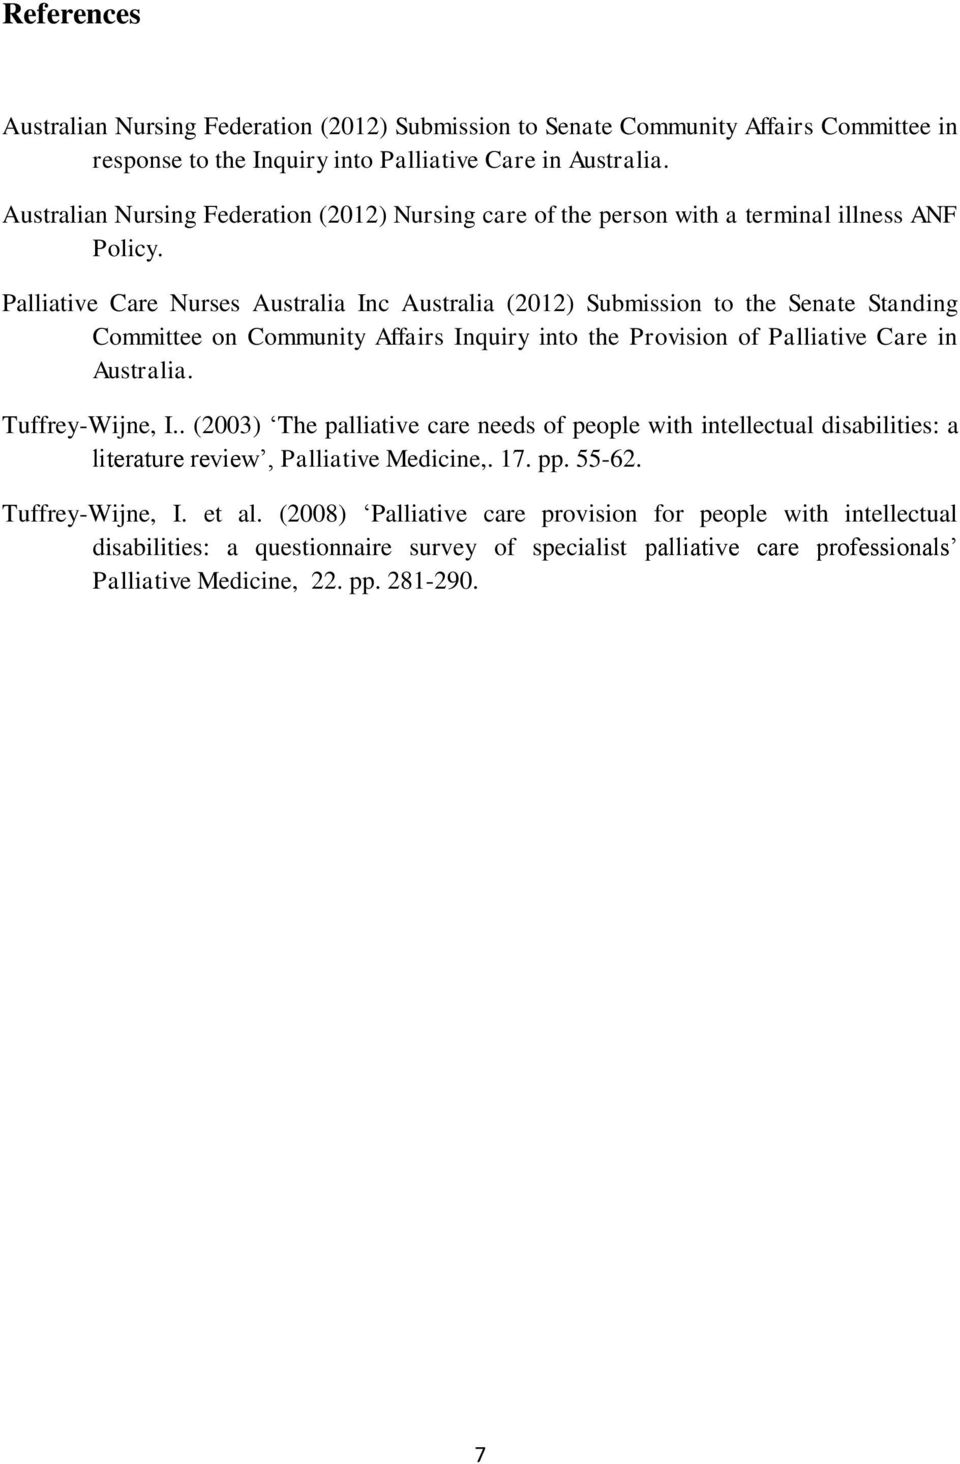 Palliative Care Nurses Australia Inc Australia (2012) Submission to the Senate Standing Committee on Community Affairs Inquiry into the Provision of Palliative Care in Australia. Tuffrey-Wijne, I.